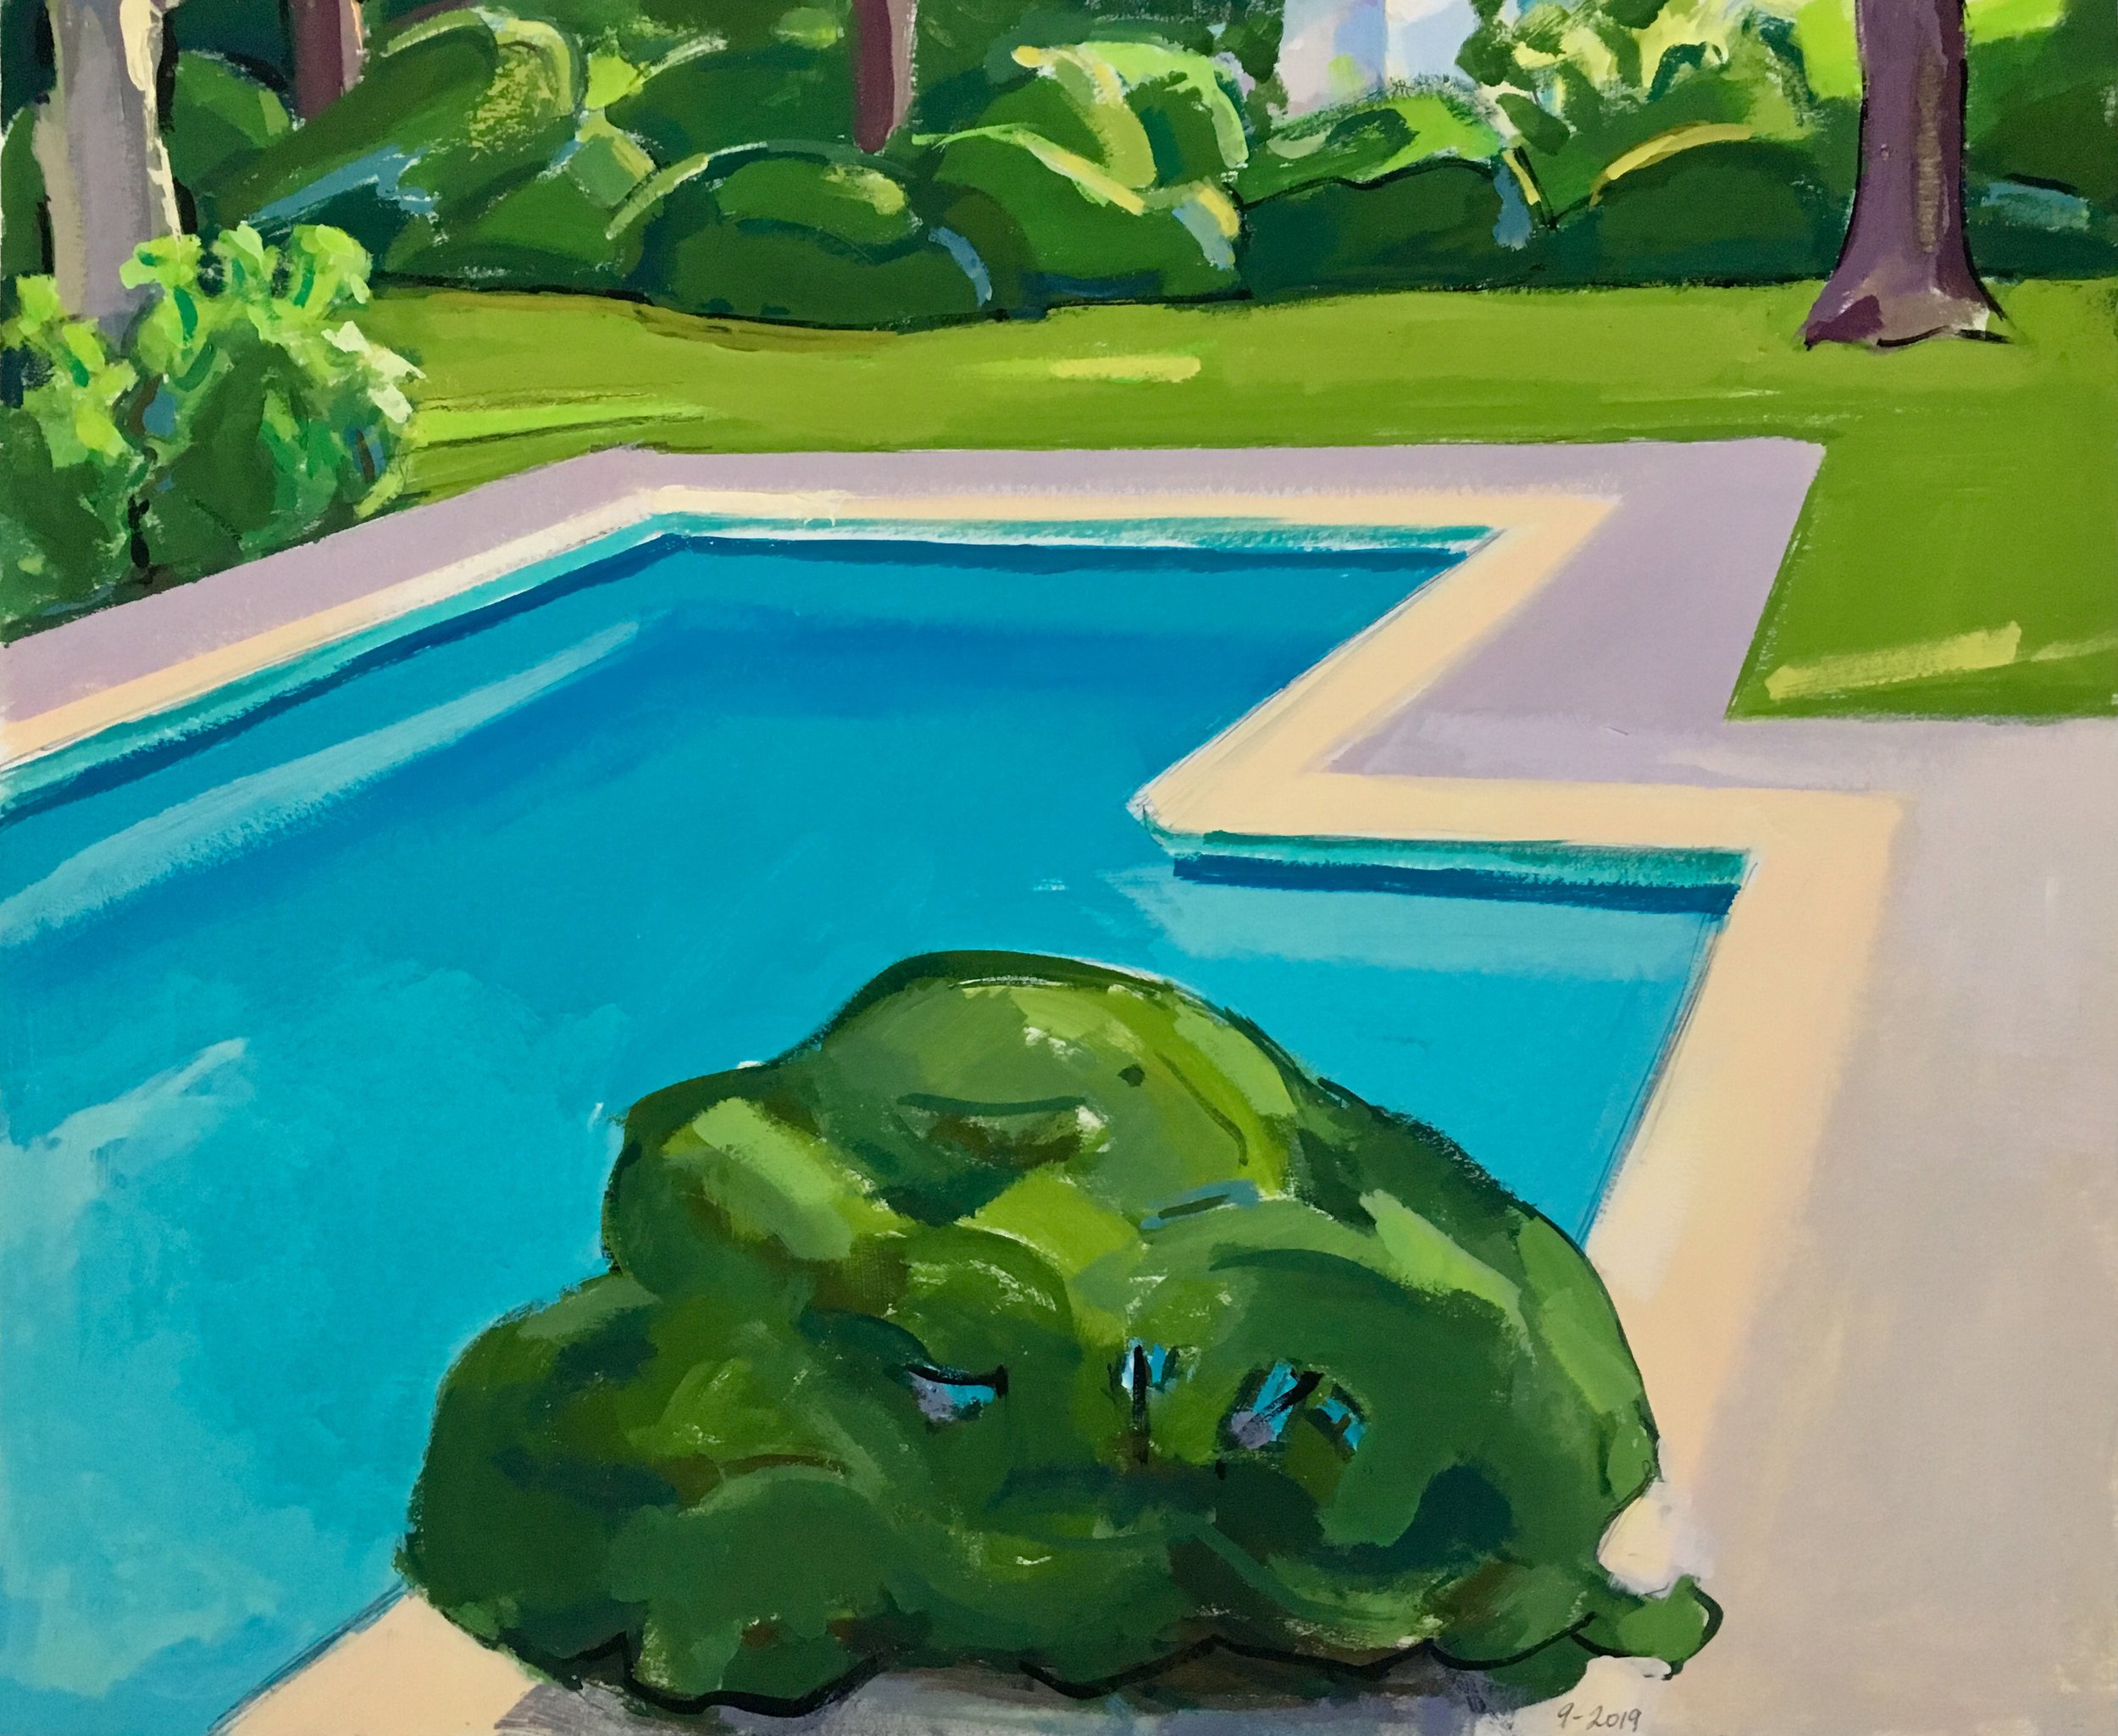    Pool with Shrub,   gouache, 14 x 17 in, 2019   